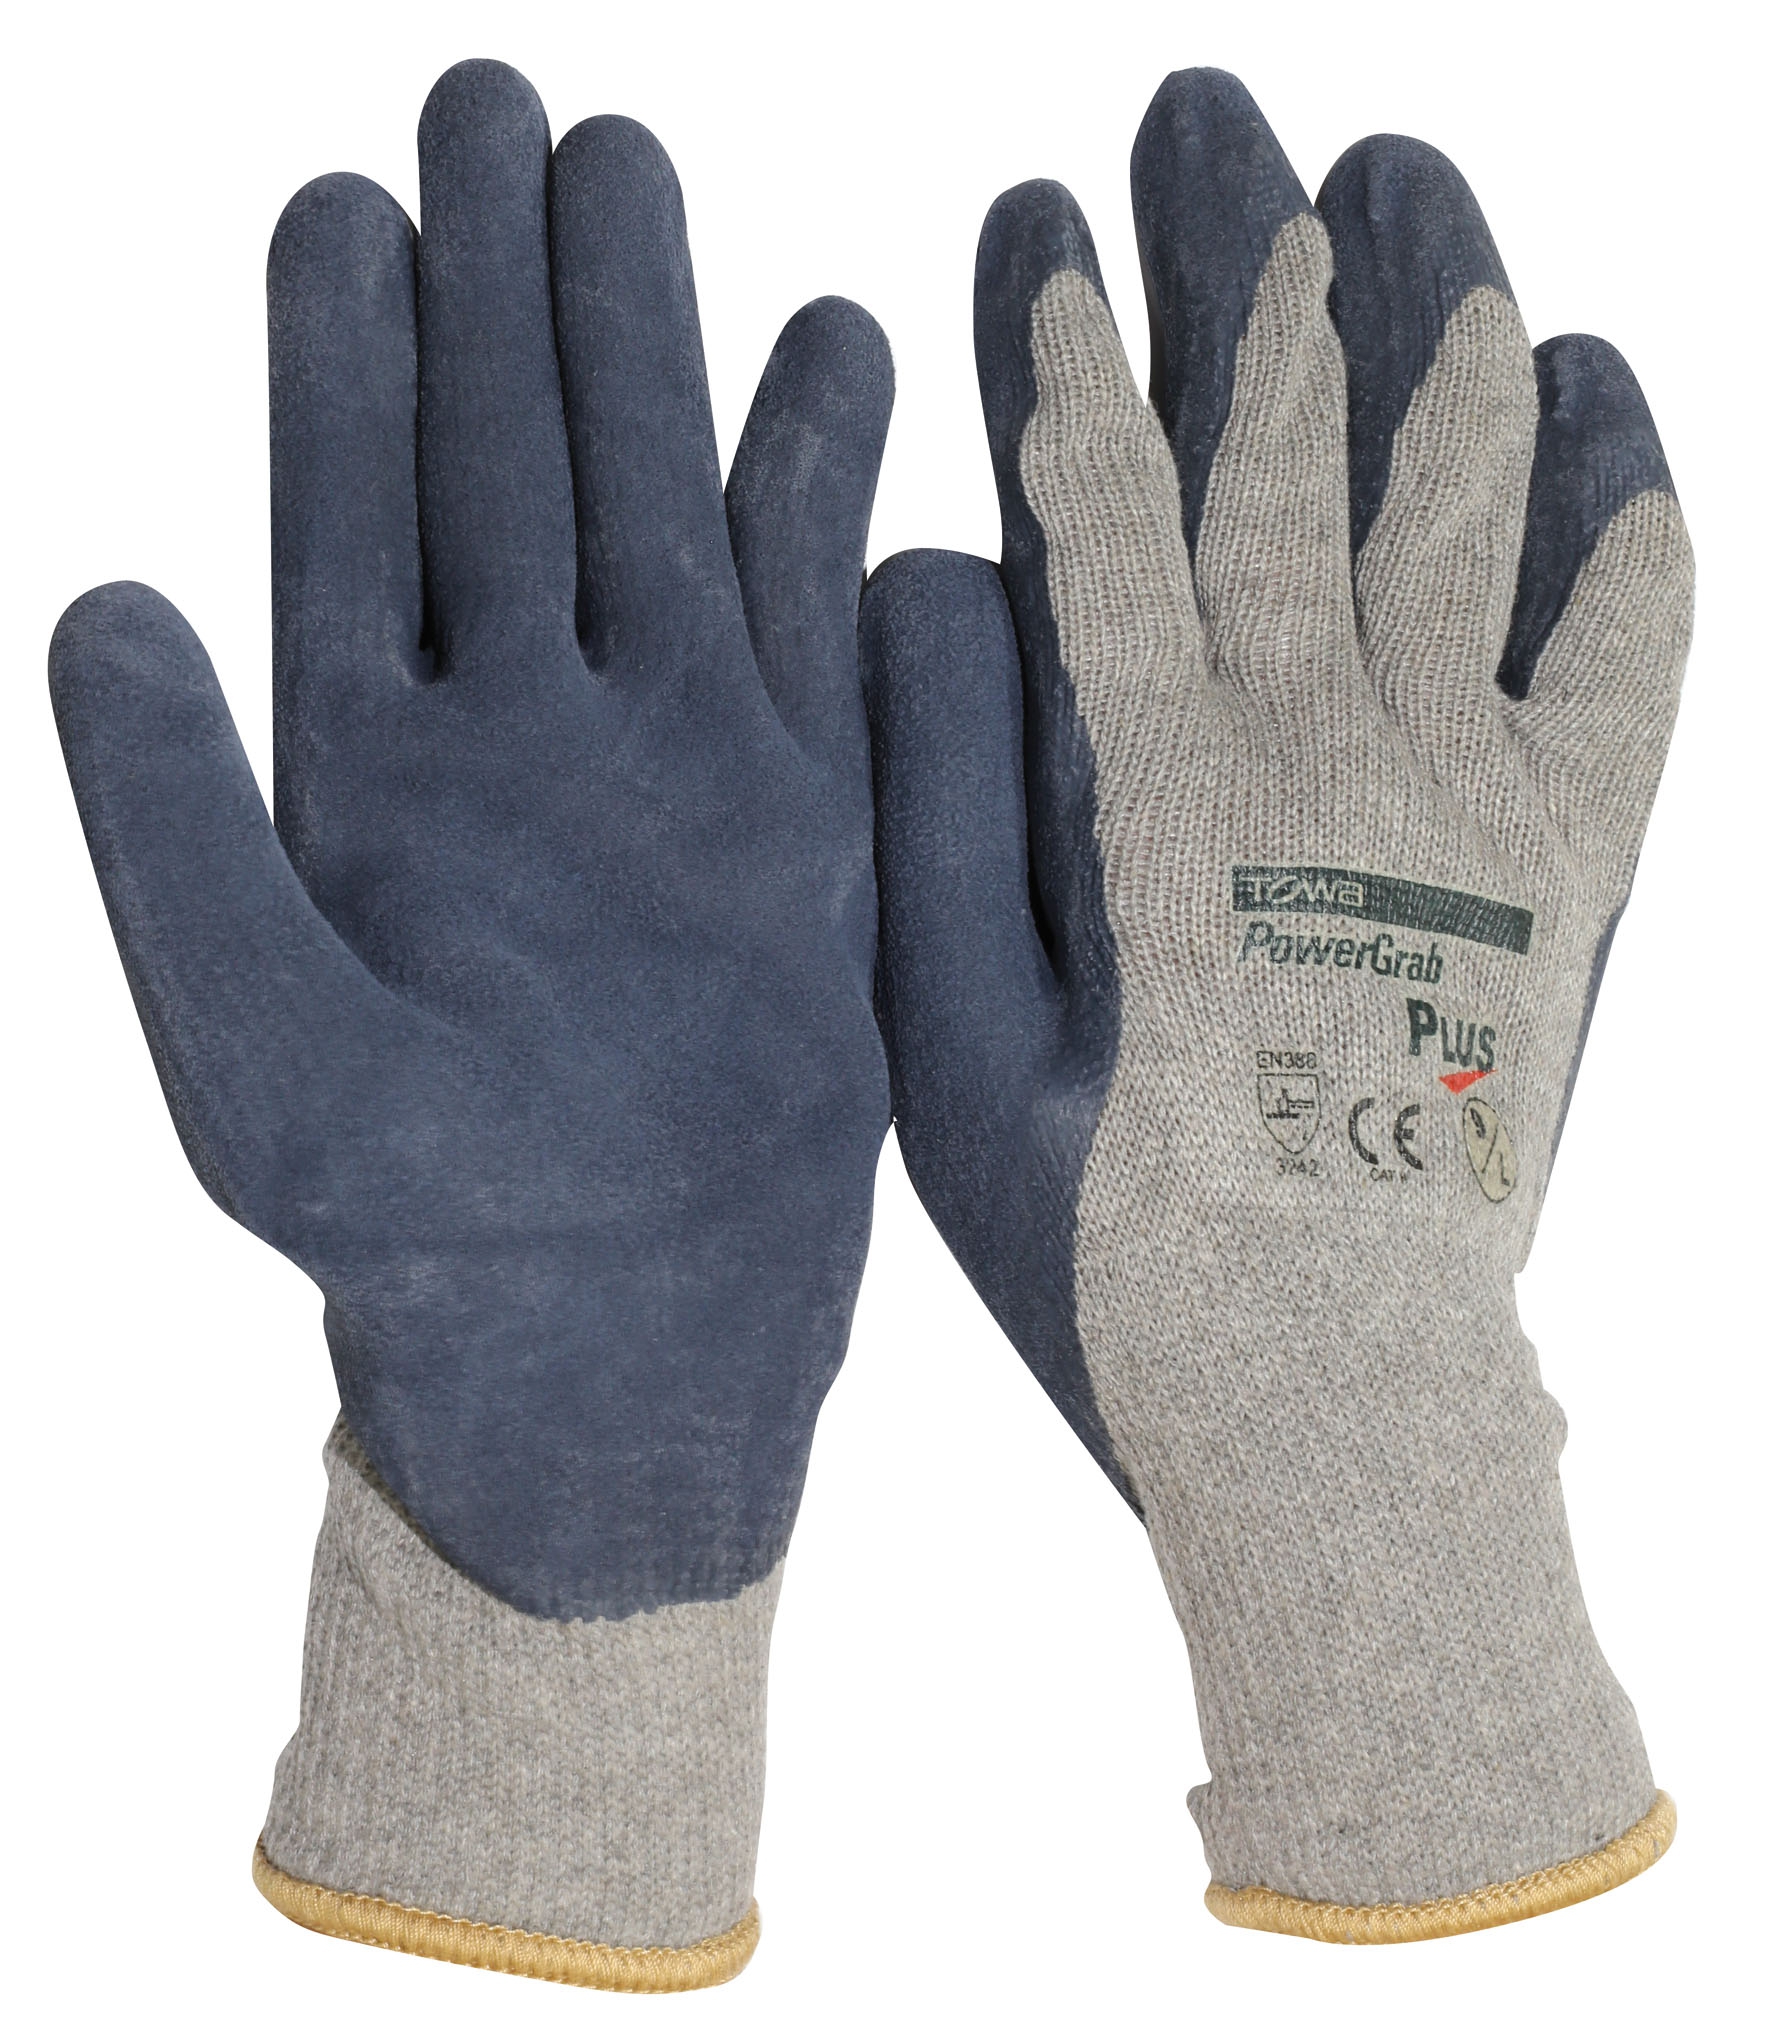 Cotton-Polyester-Latex Glove